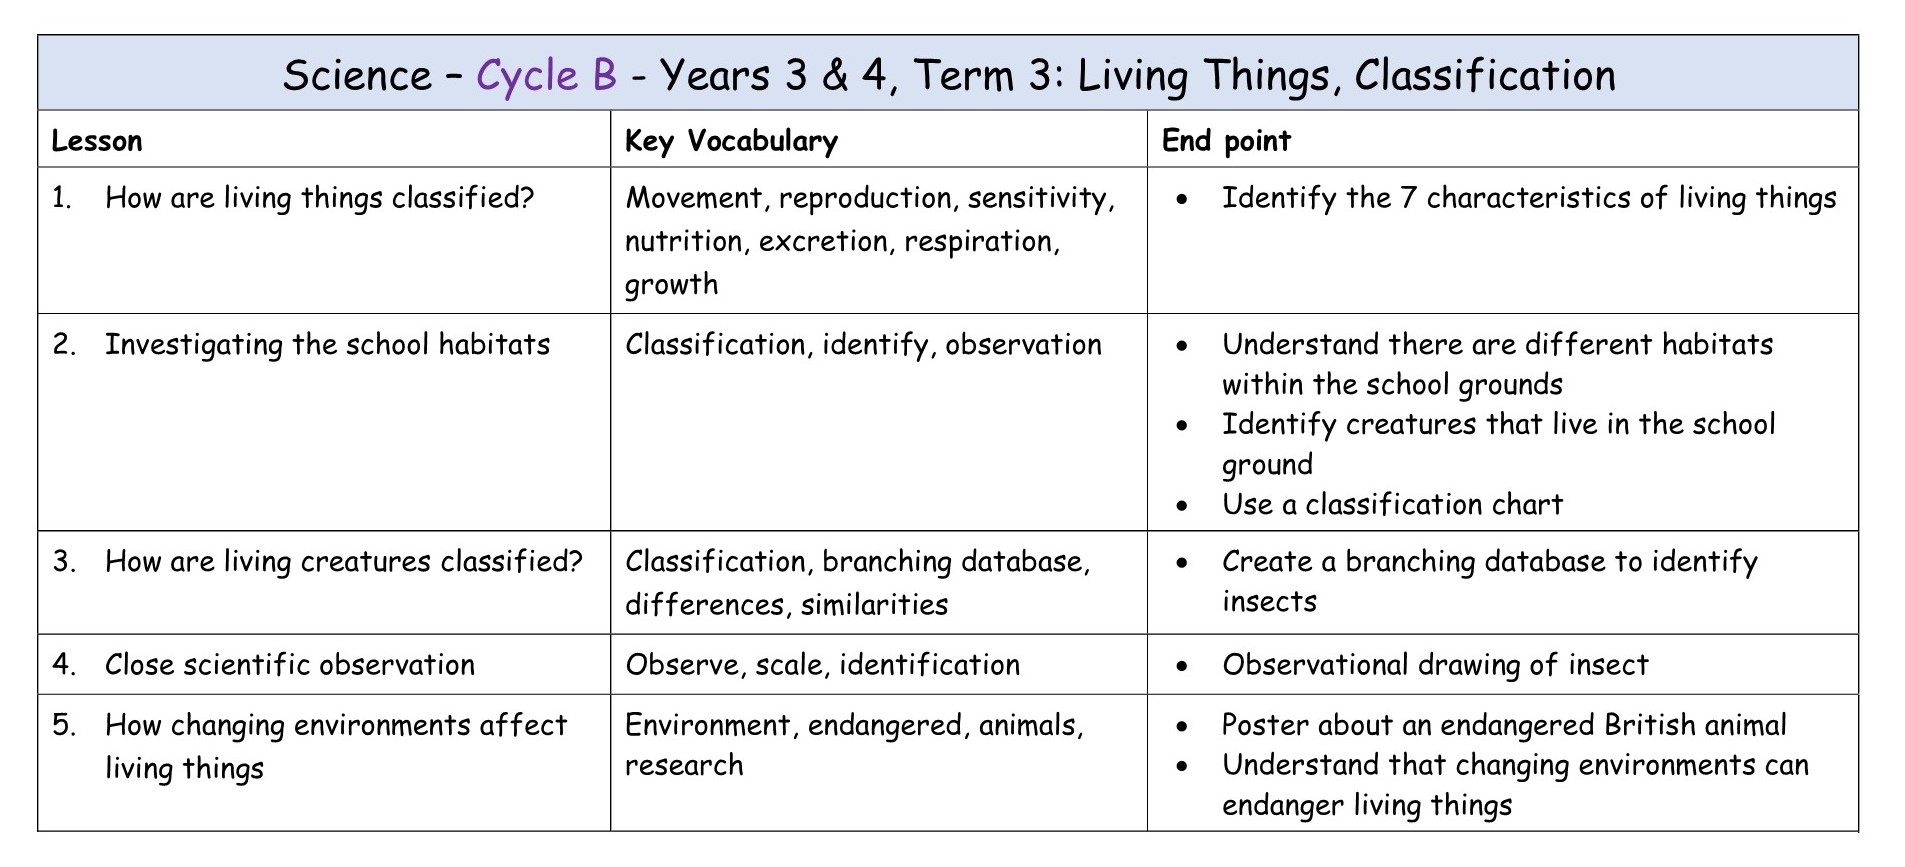 Science Y3-4 Cycle B T3